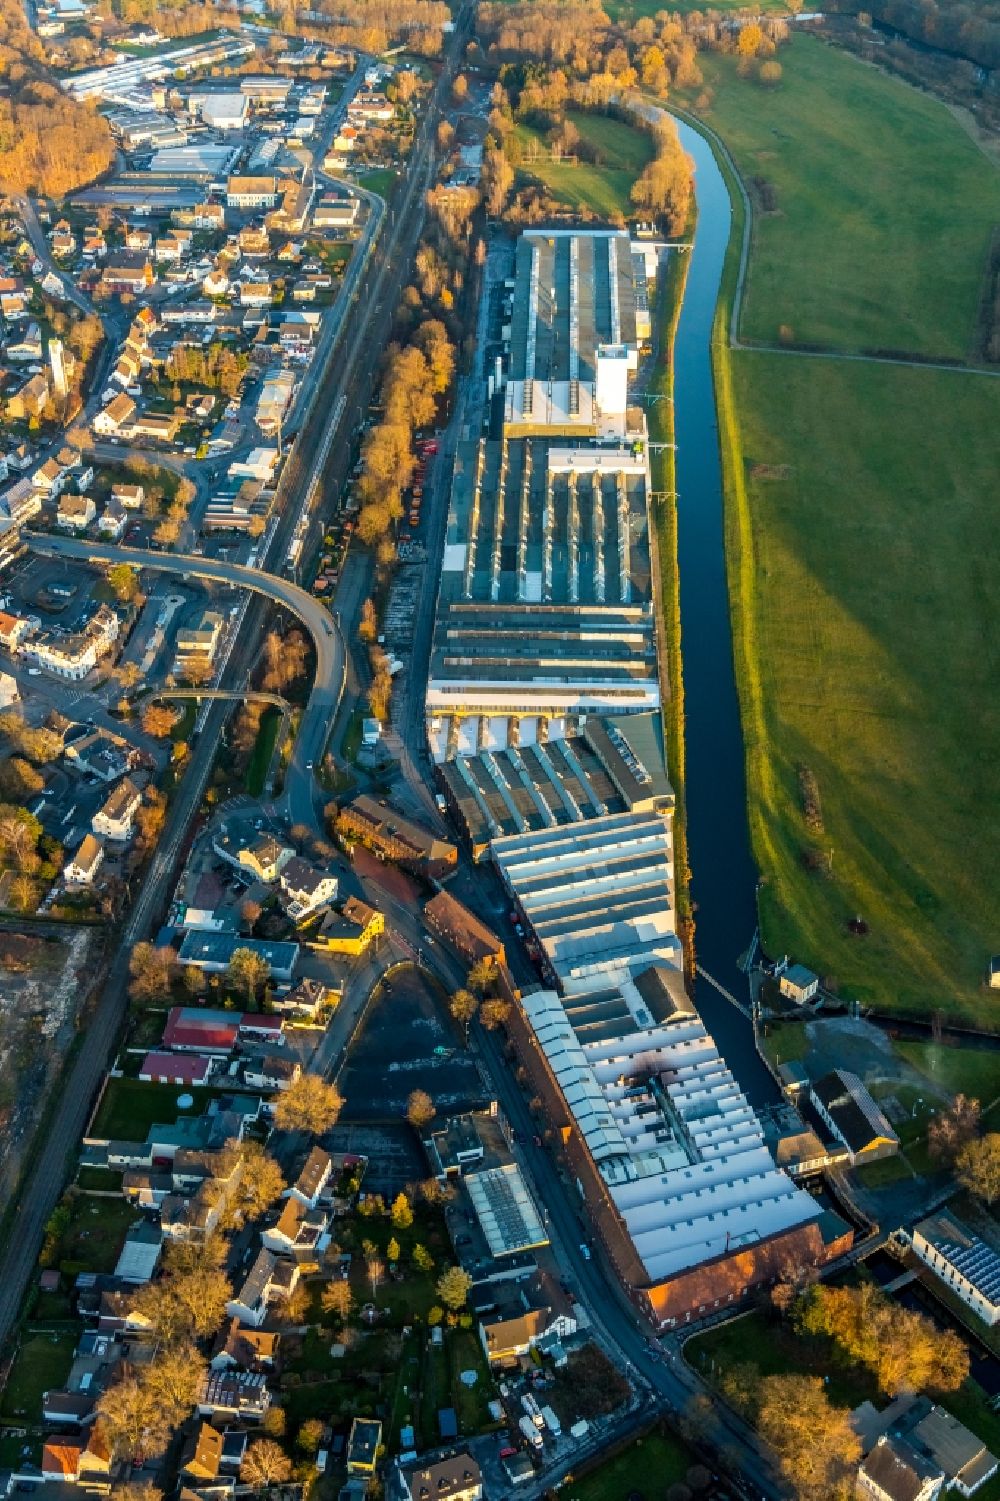 Aerial photograph Wickede (Ruhr) - Aerial view of Wickeder Westfalenstahl industrial buildings on the river Ruhr at Obergraben in Wickede (Ruhr) in the German state of North Rhine-Westphalia, Germany